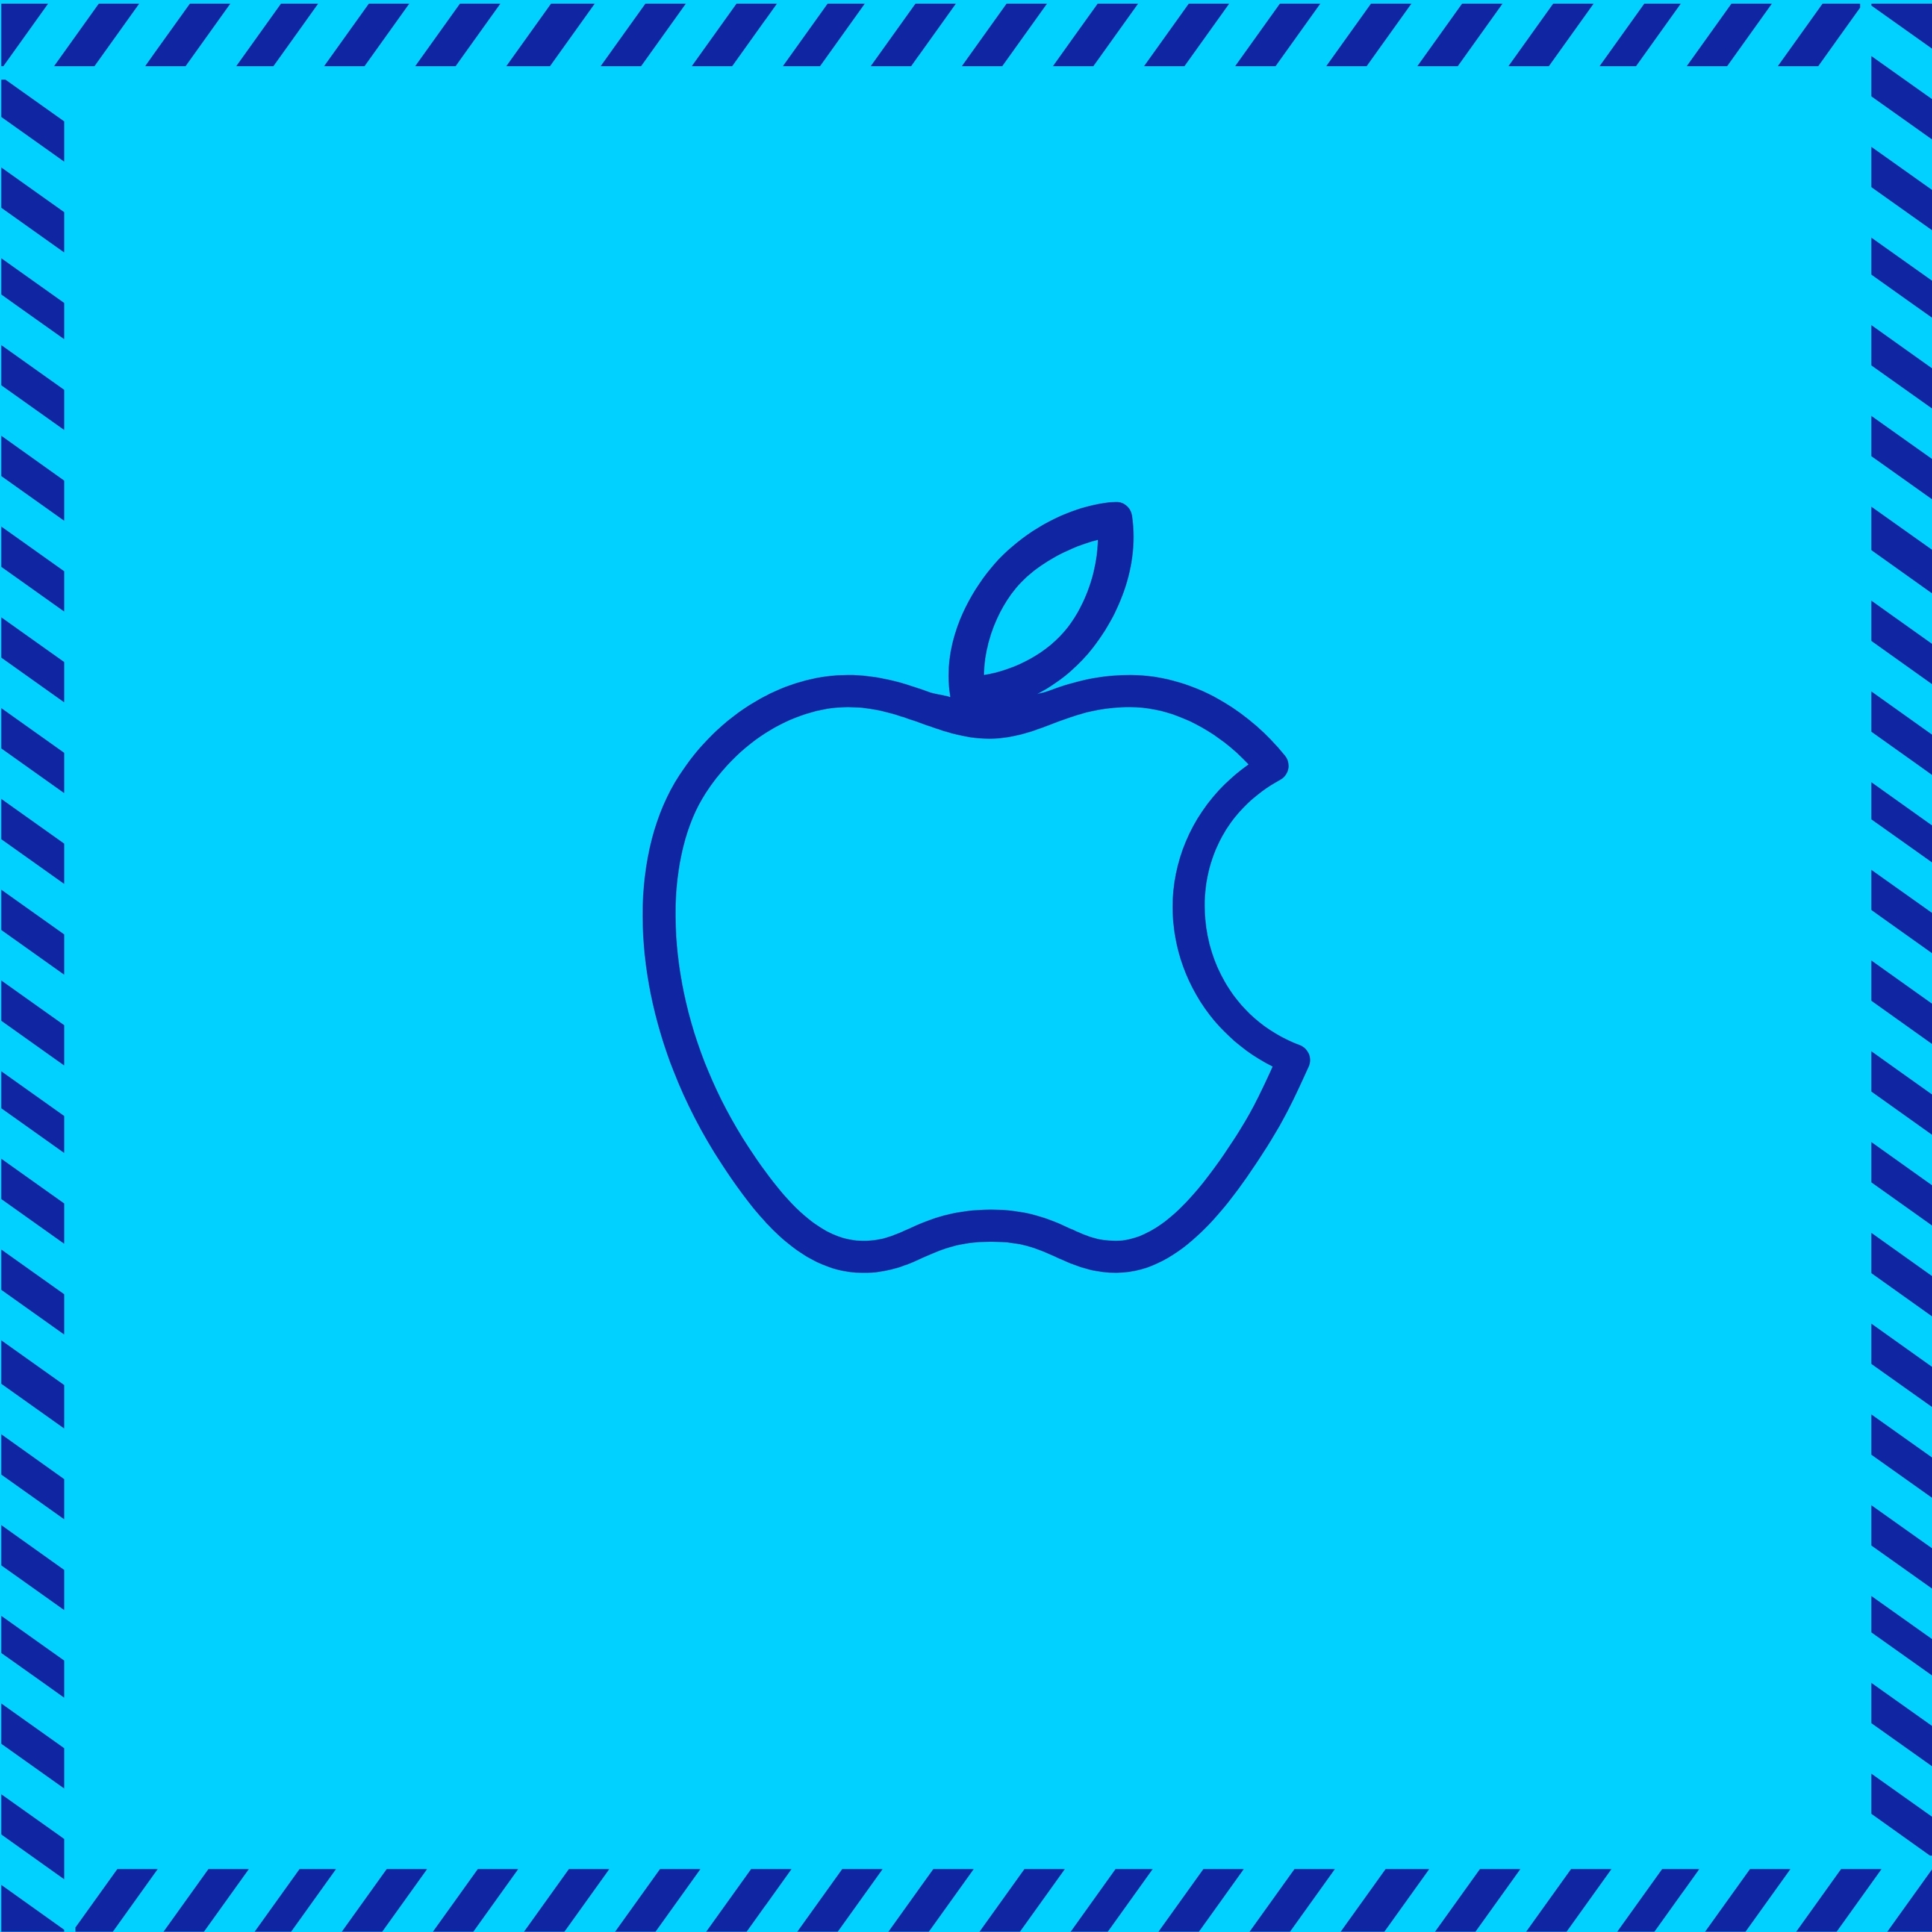 Apple Logo Blue Stripe Border iPad Wallpaper